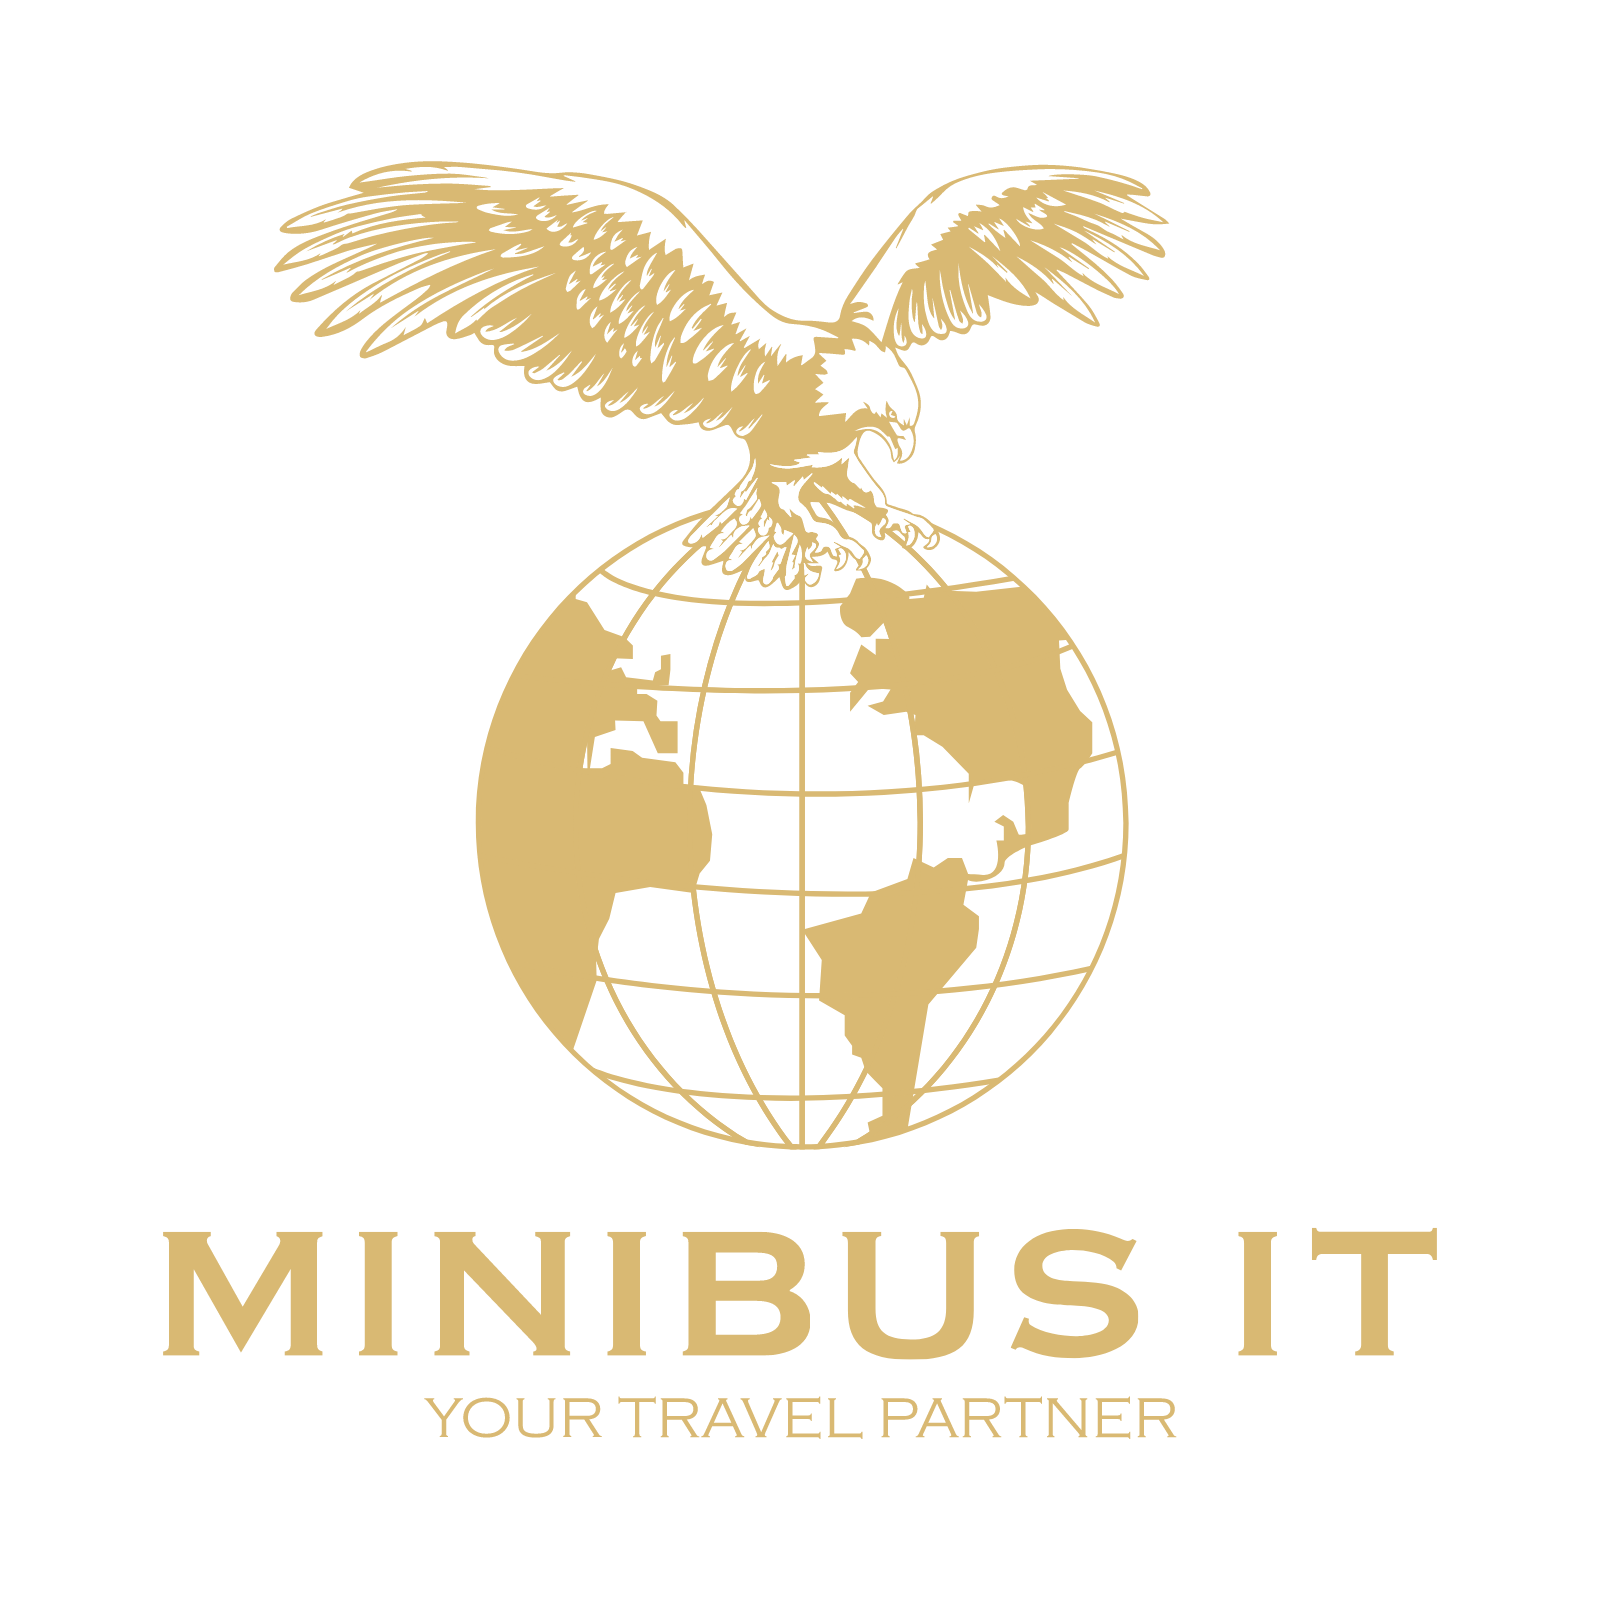 East London Minibus Hire - Minibus IT logo